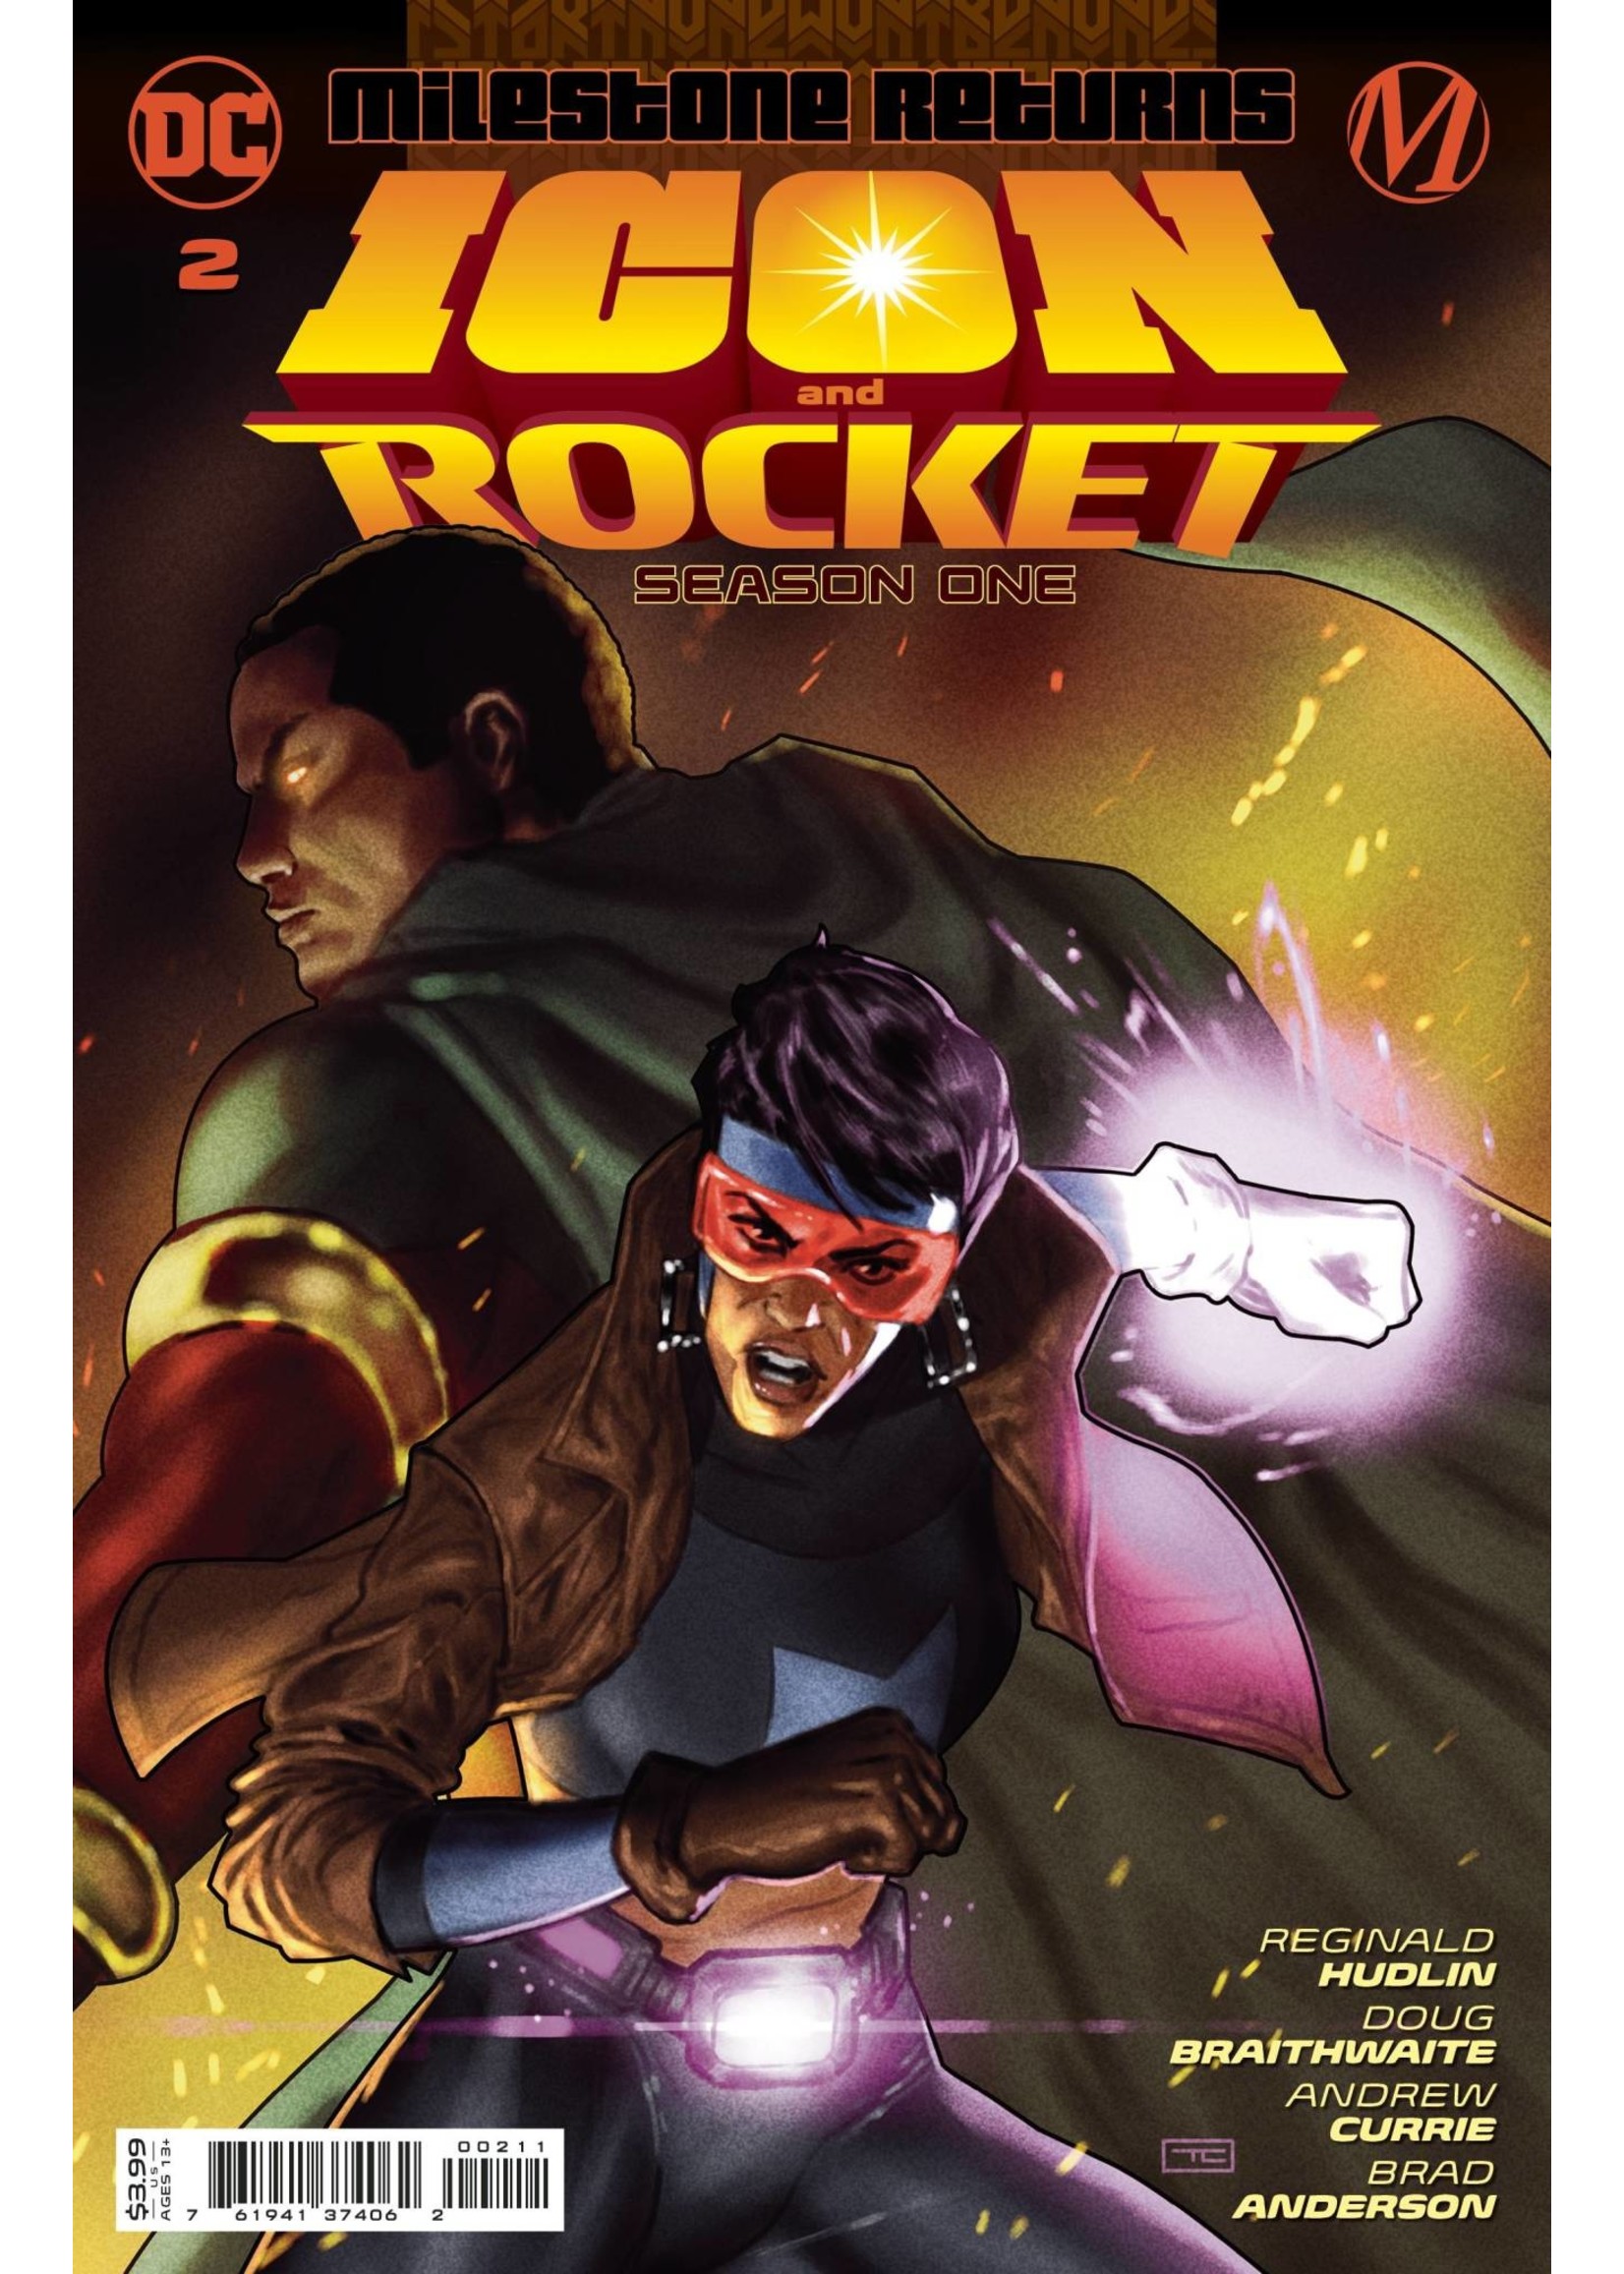 DC COMICS ICON & ROCKET SEASON ONE complete 6 issue series